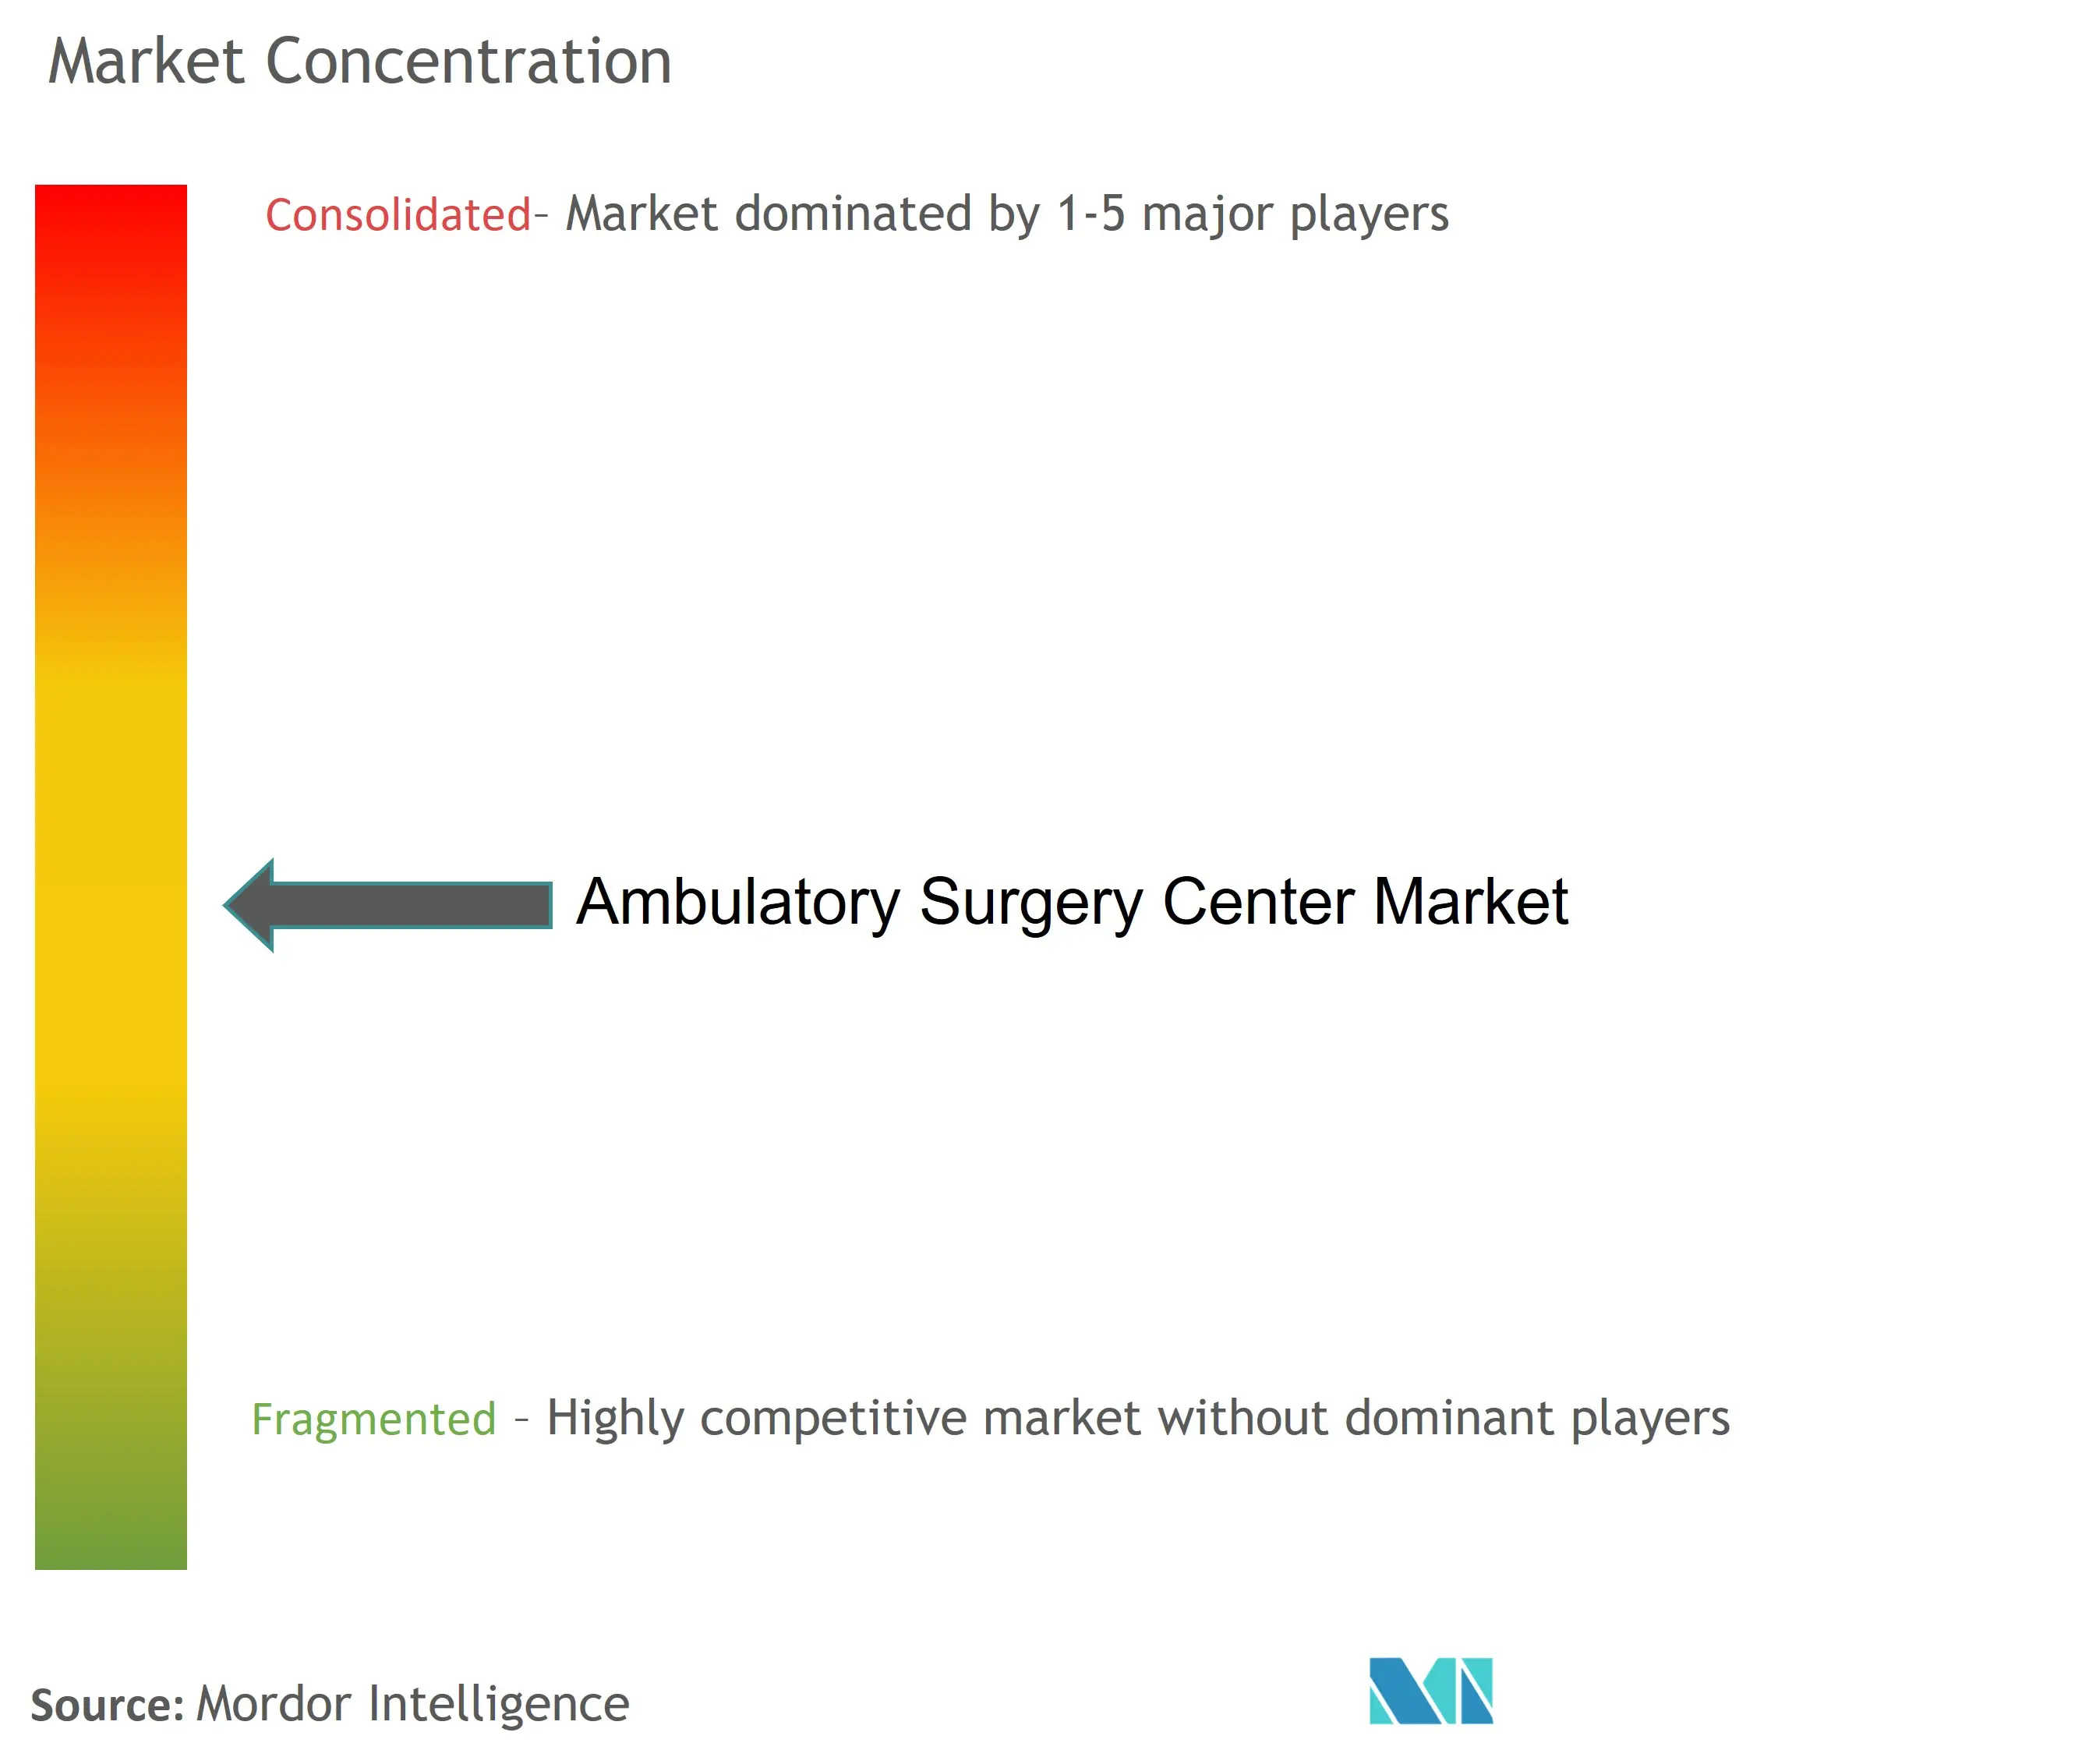 Ambulatory Surgery Center Market Concentration